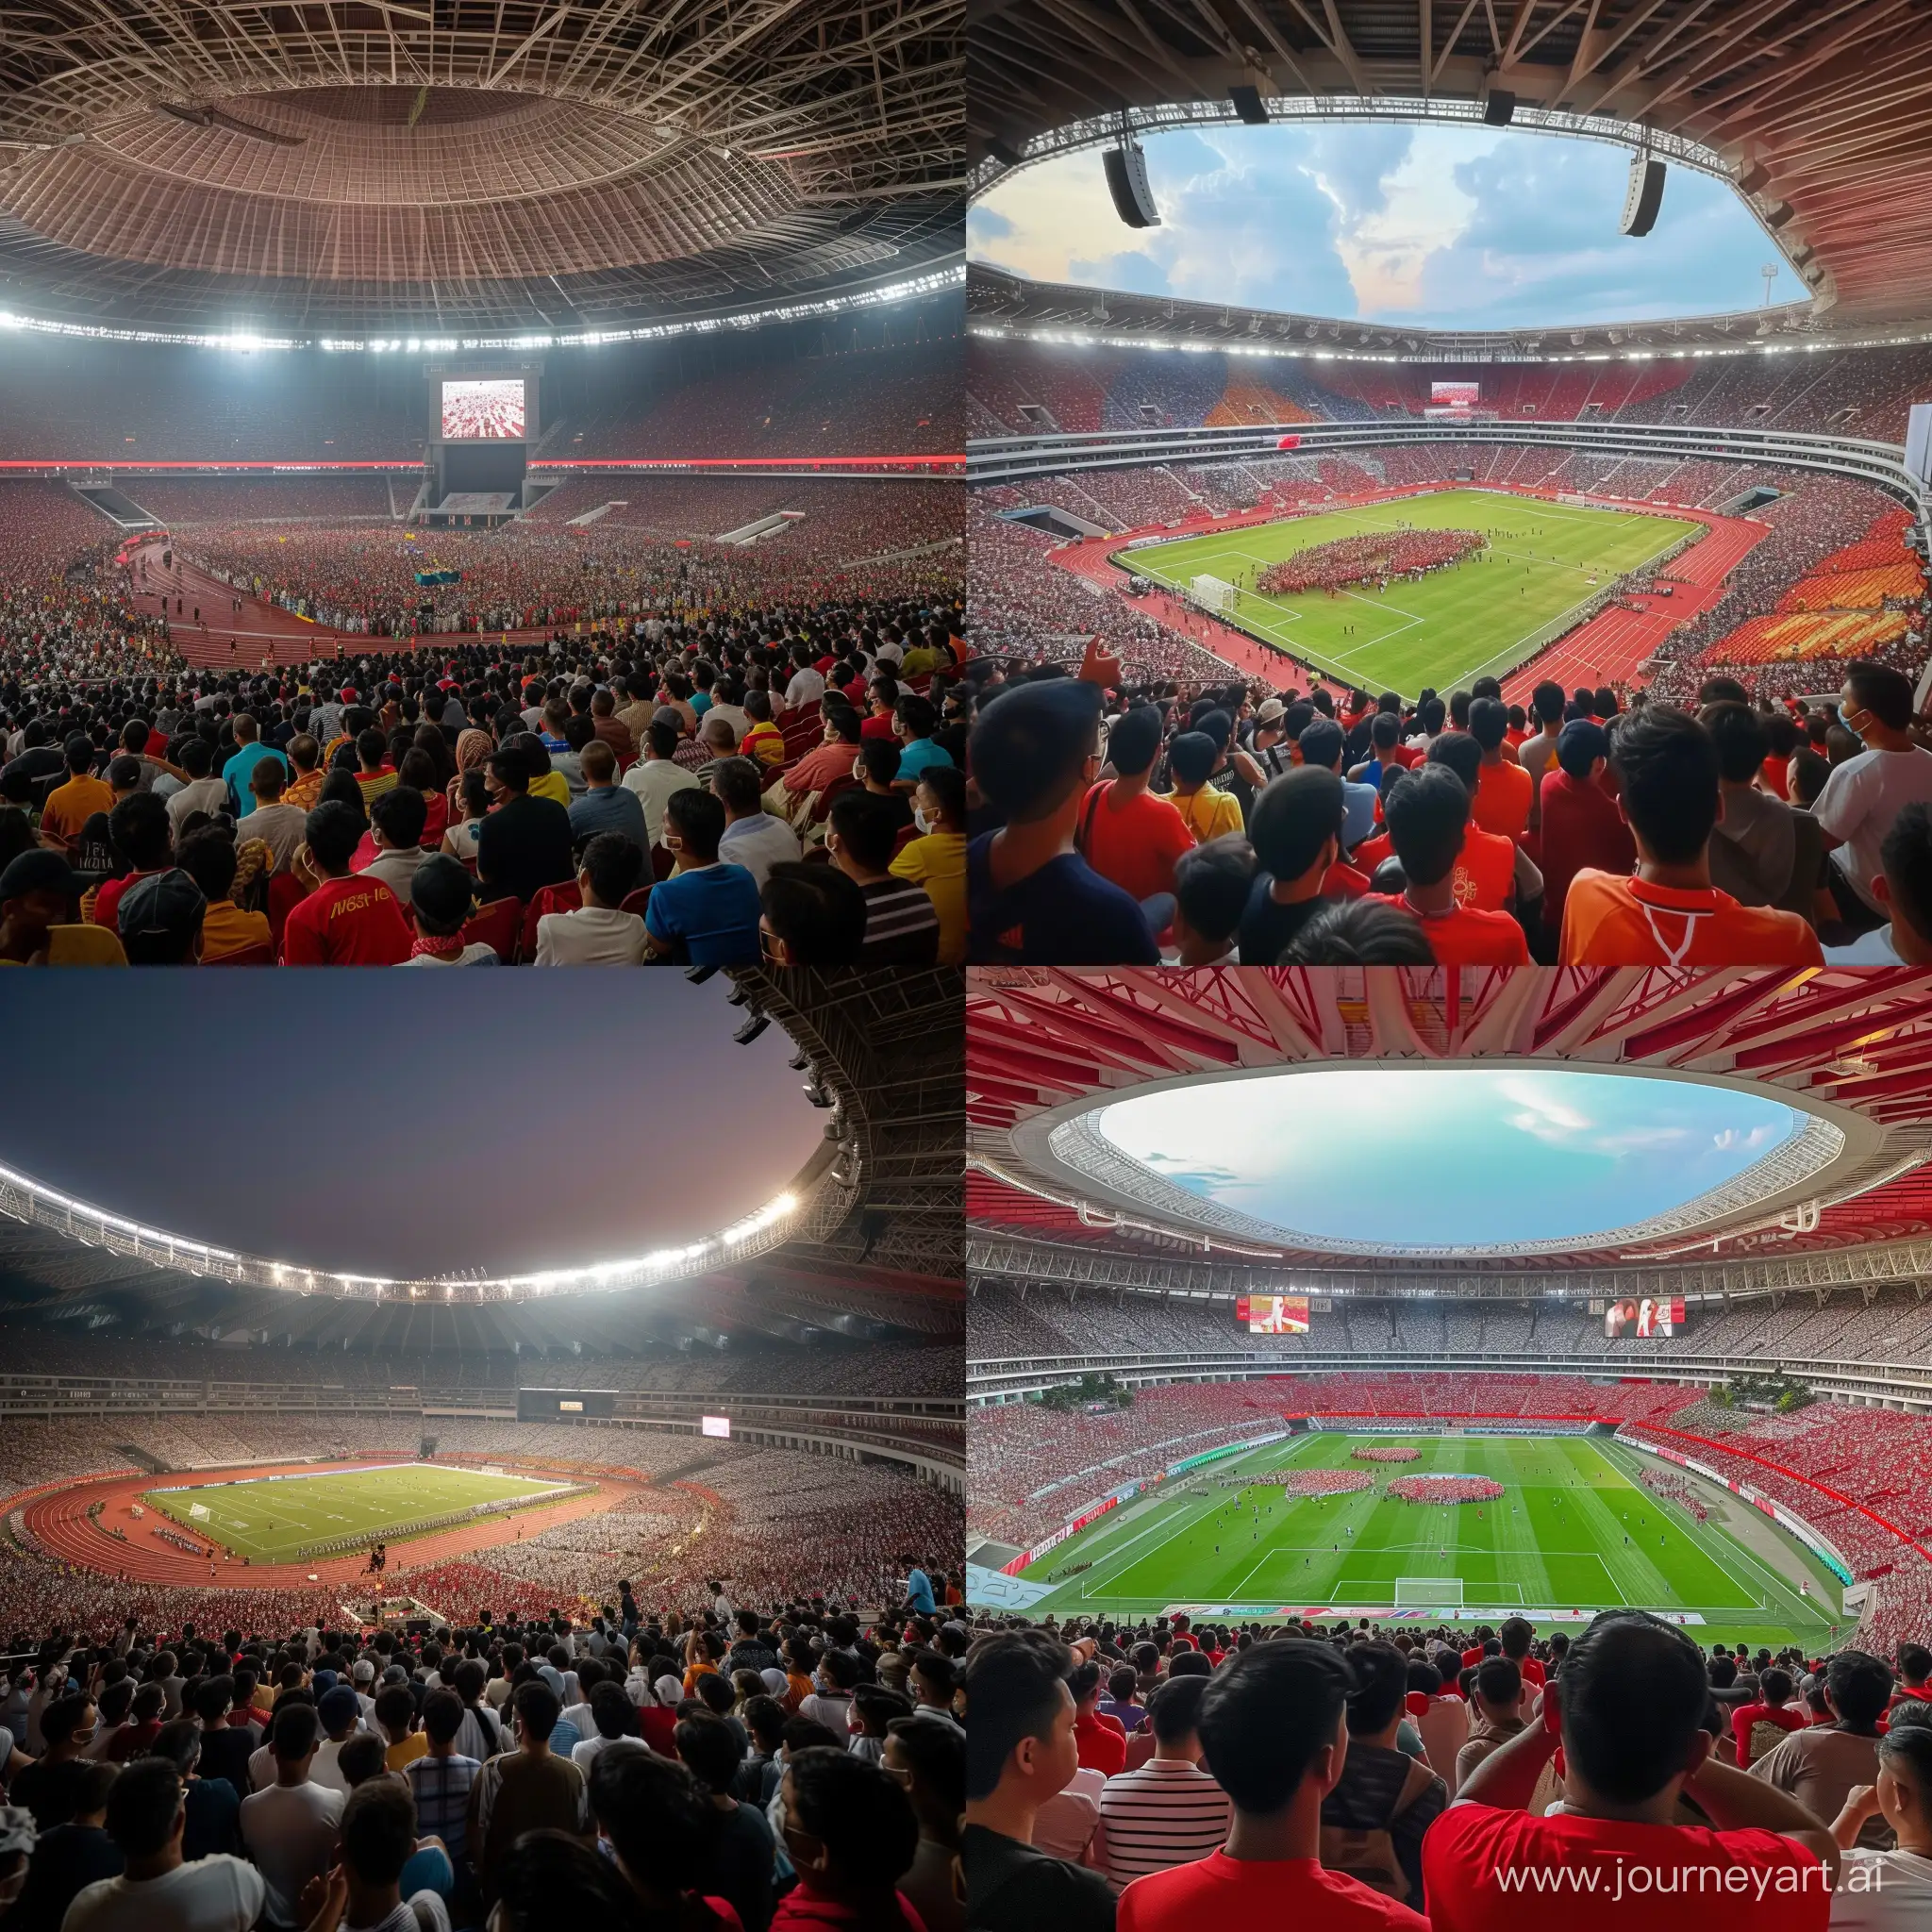 Crowded-Spectators-at-Jakarta-International-Stadium